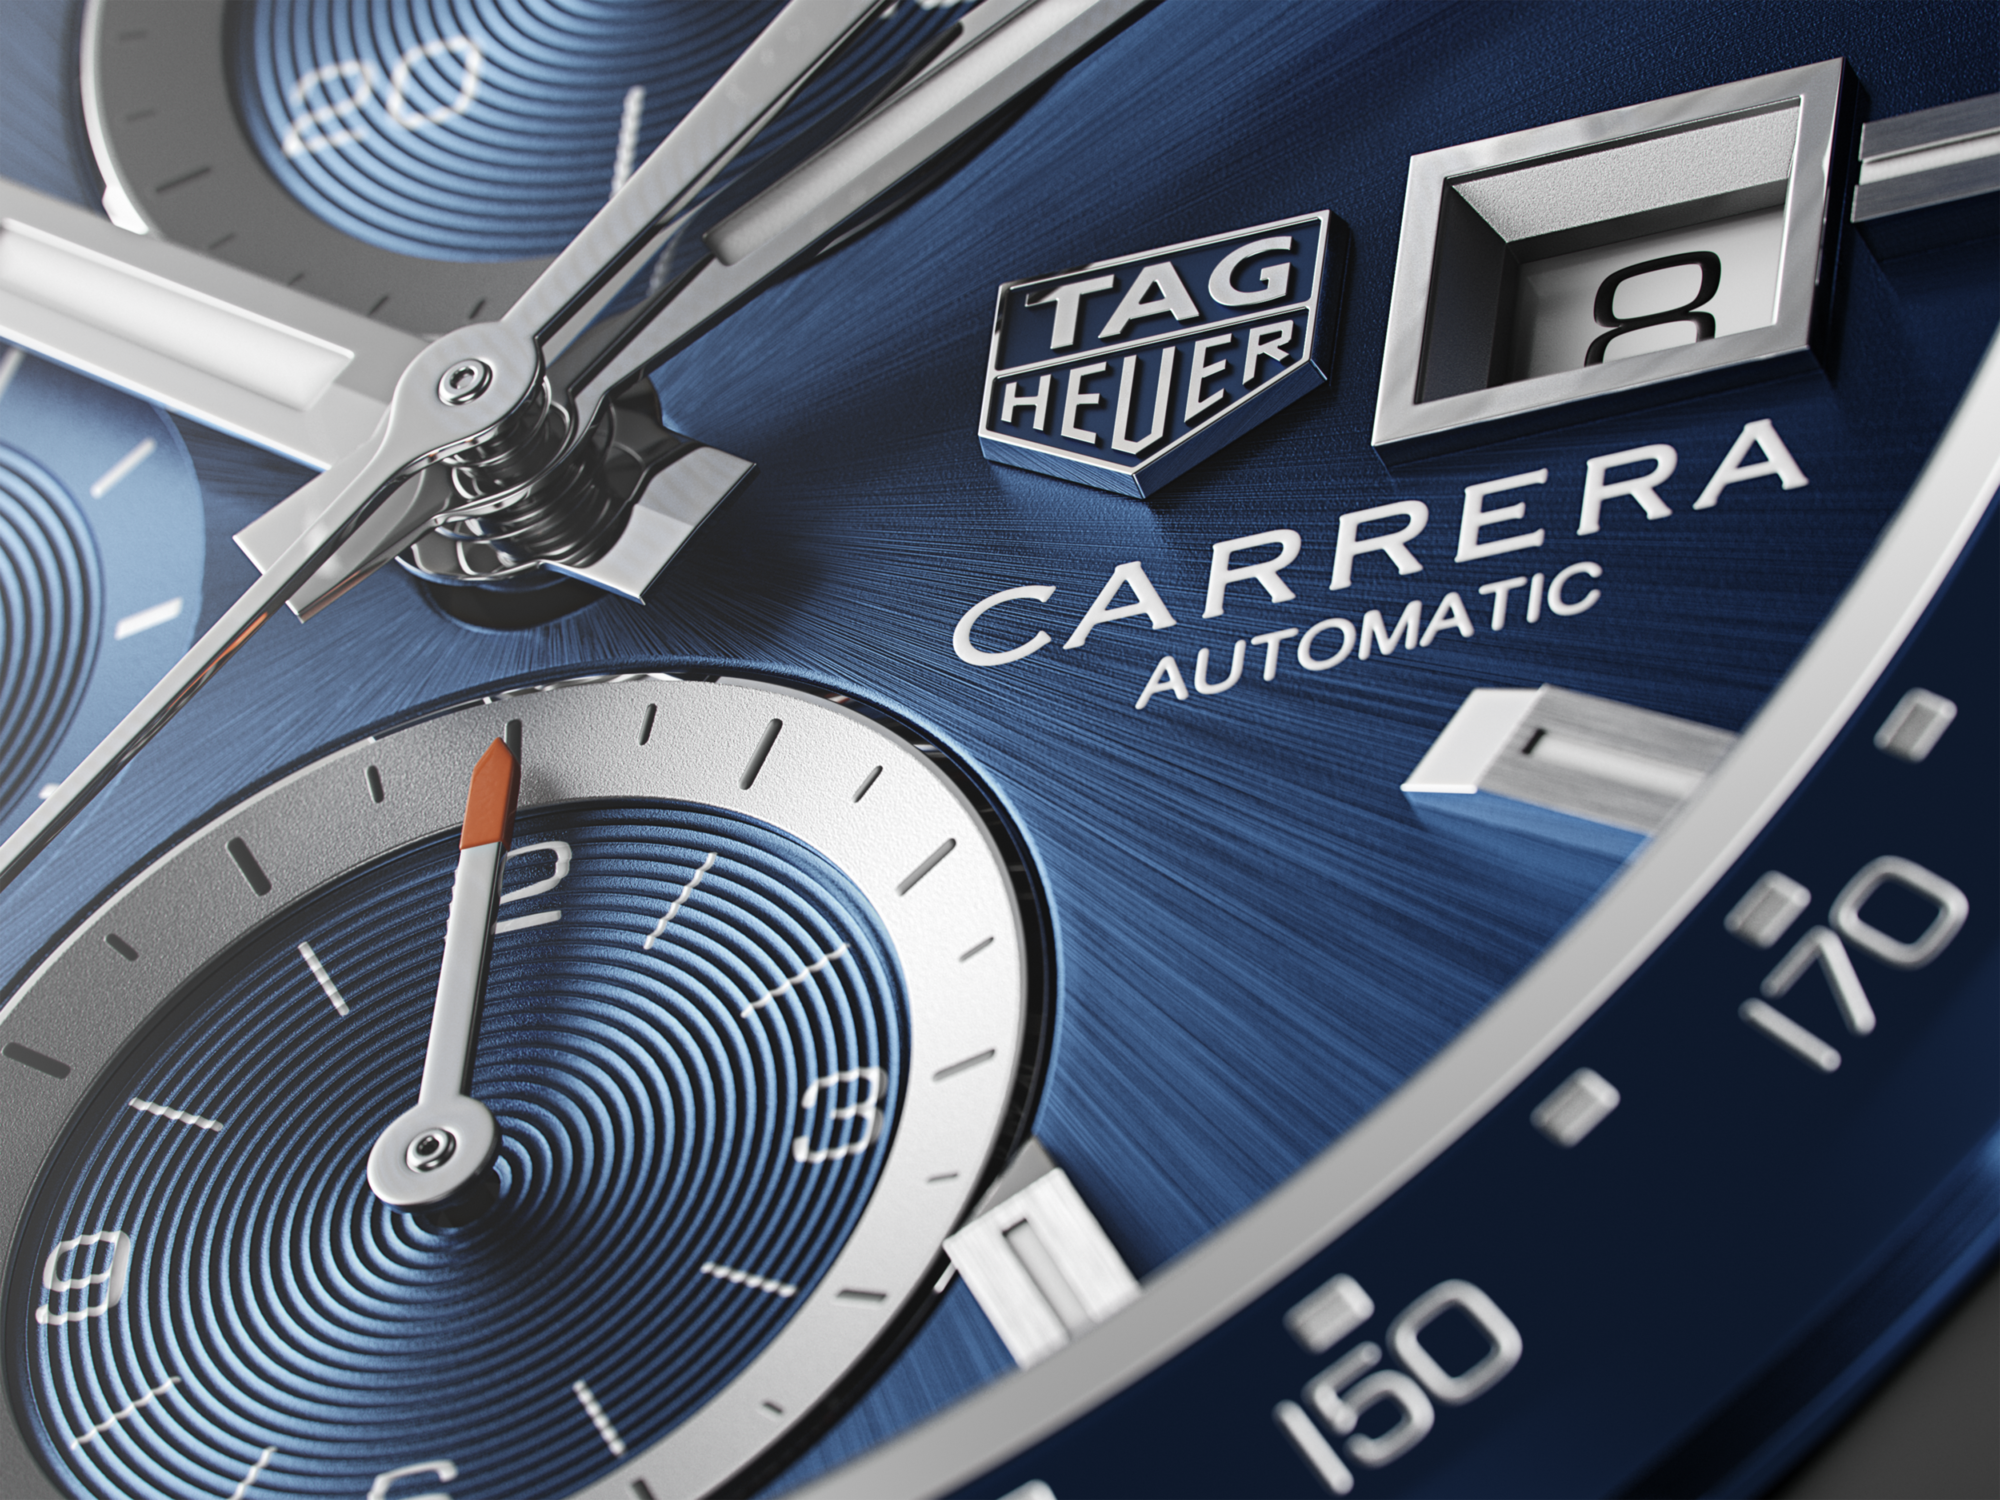 TAG Heuer Carrera                                                                                                 Chronographe automatique                   -                       Diamètre 41 mm                                                             TAG Heuer CARRERA Référence :  CBM2112.BA0651 -3